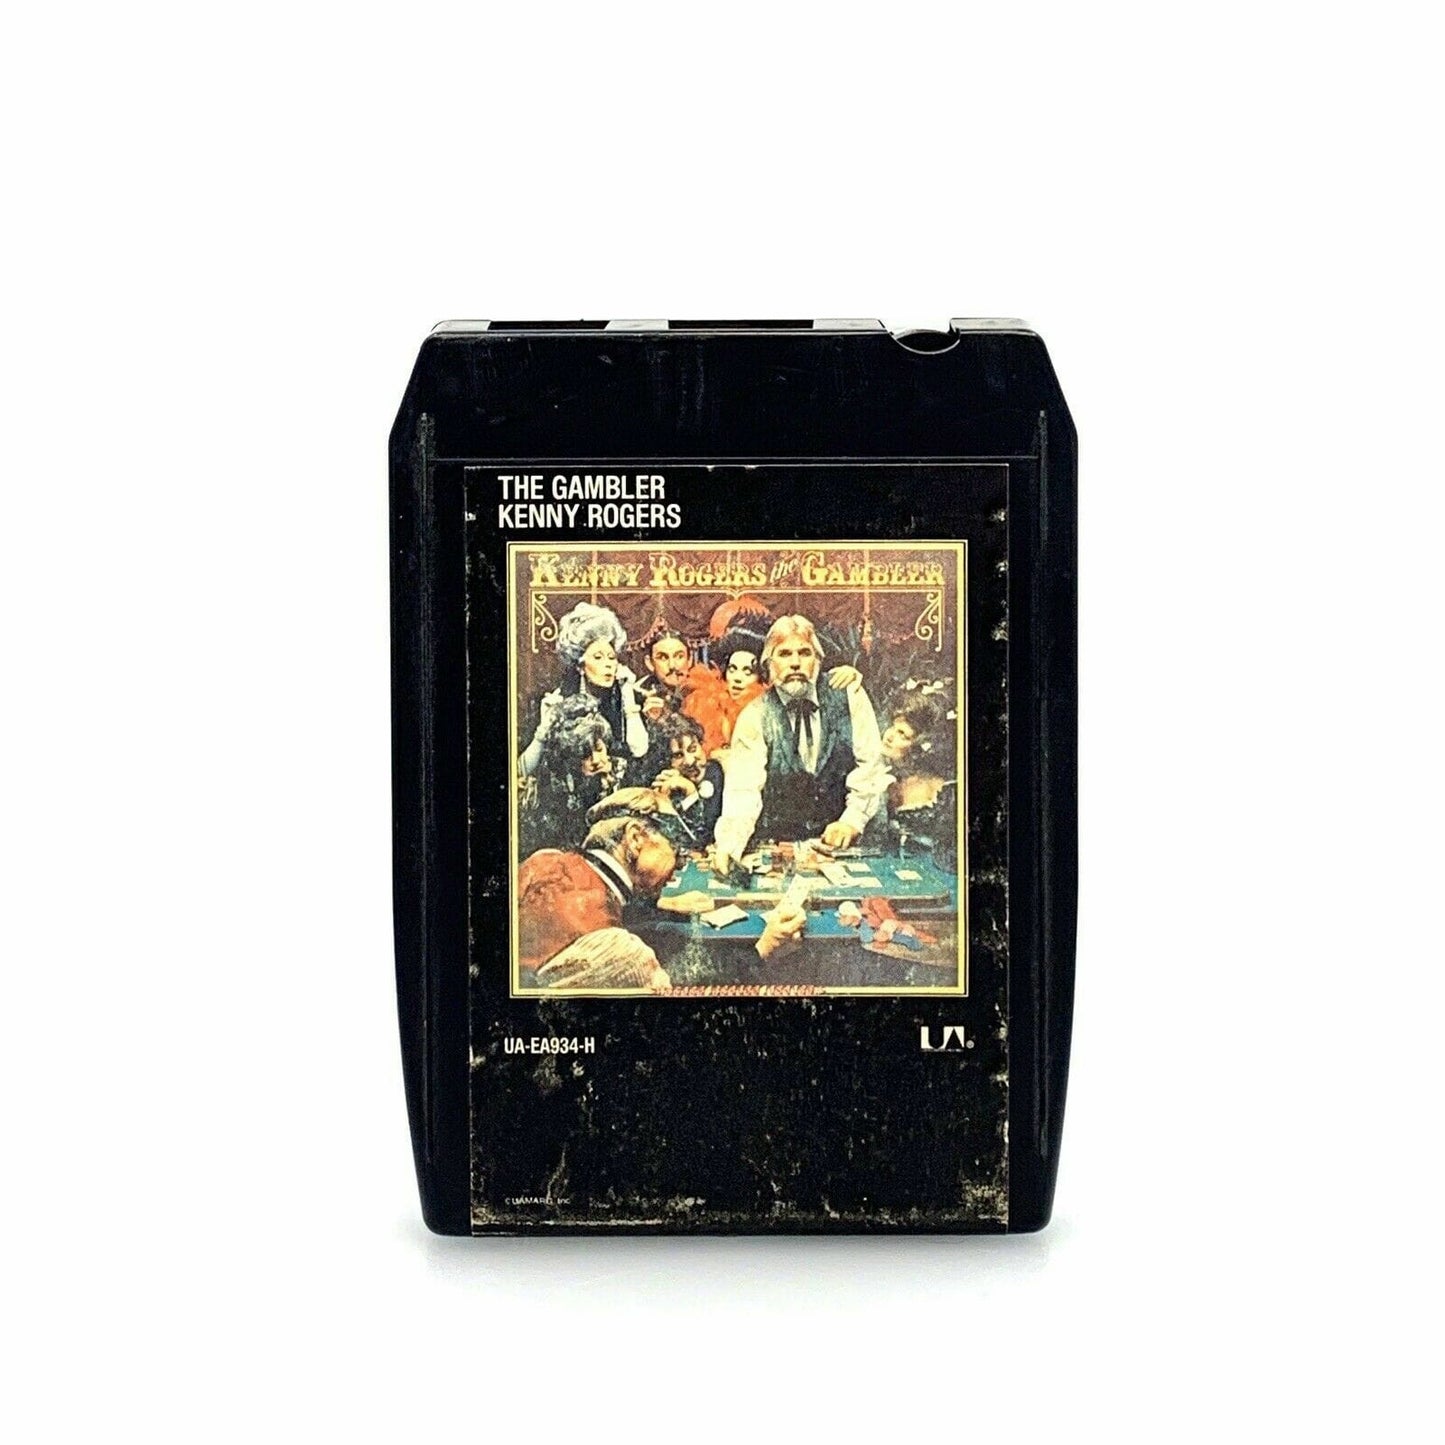 Kenny Rogers: The Gambler 8 Track Tape, UA-EA934-H